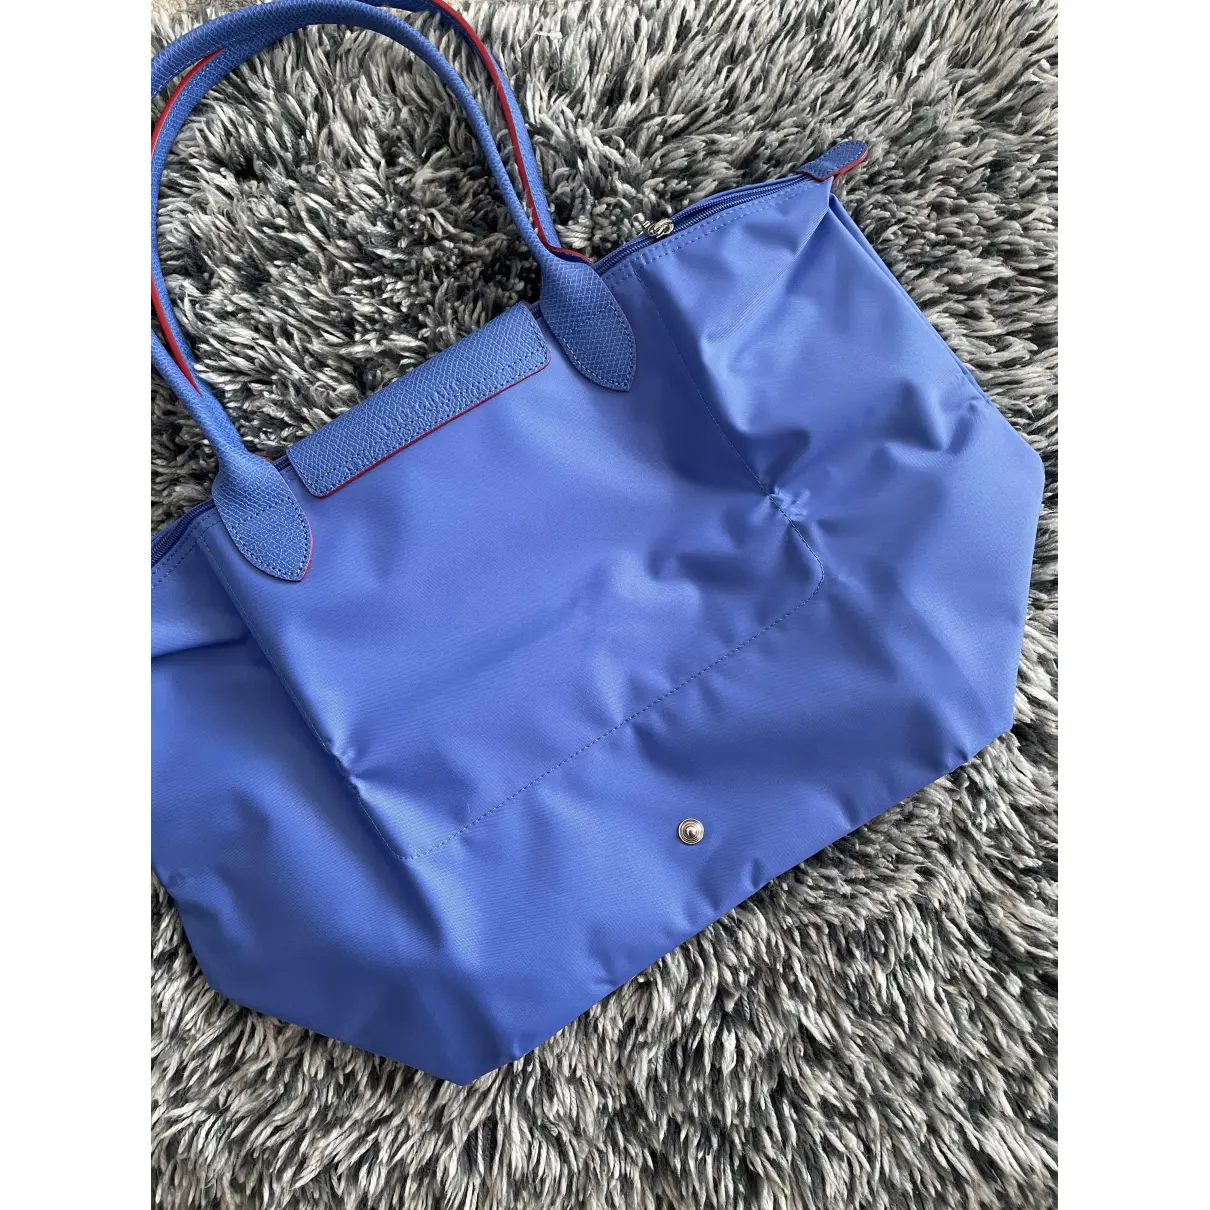 Buy Longchamp Pliage  handbag online